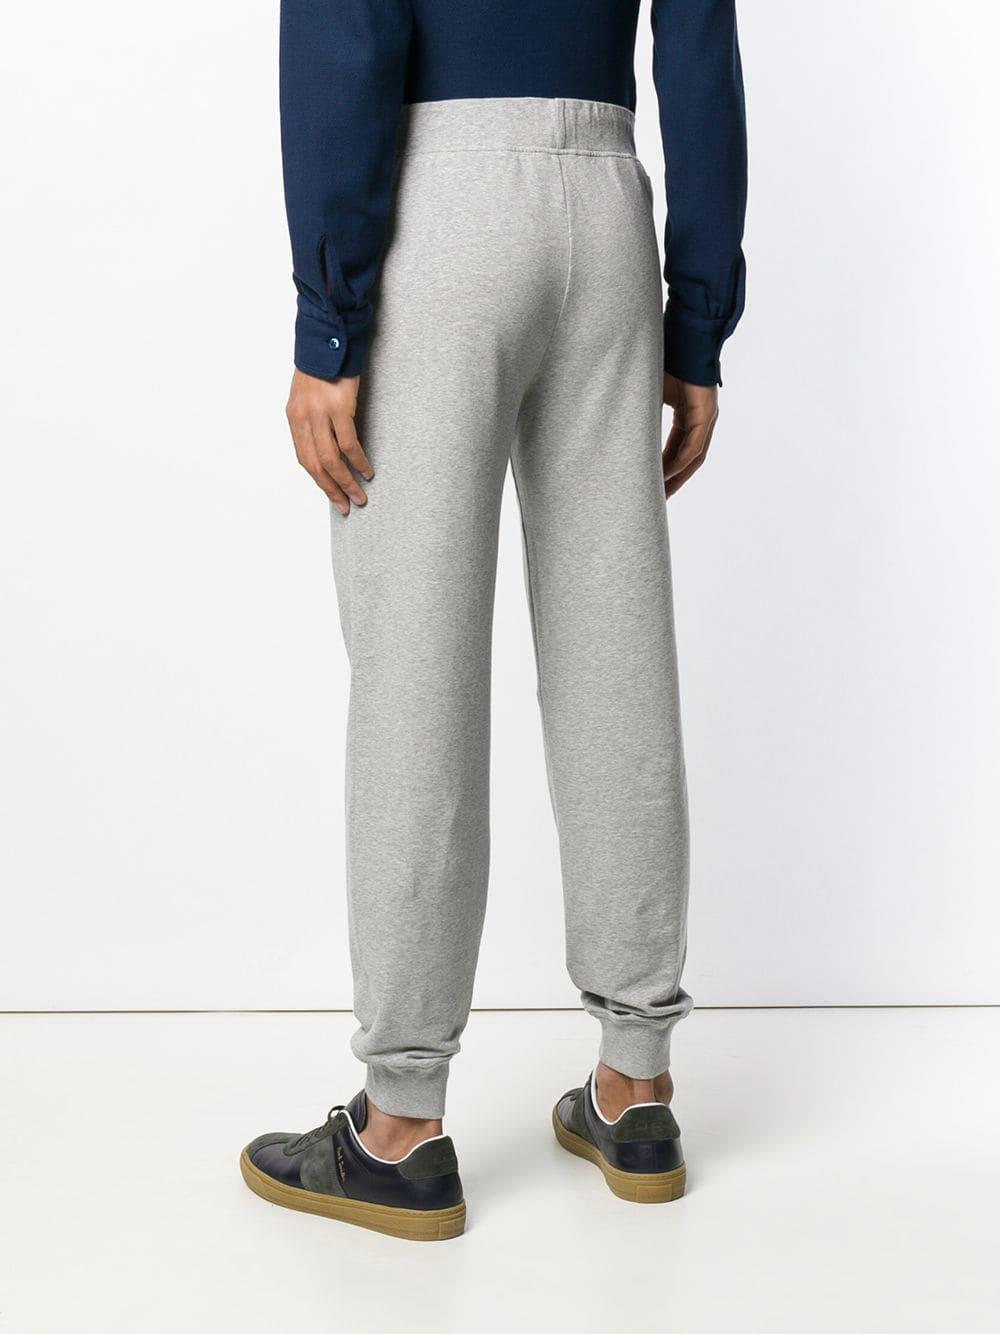 Loro Piana Drawstring Track Pants in Grey (Gray) for Men - Lyst